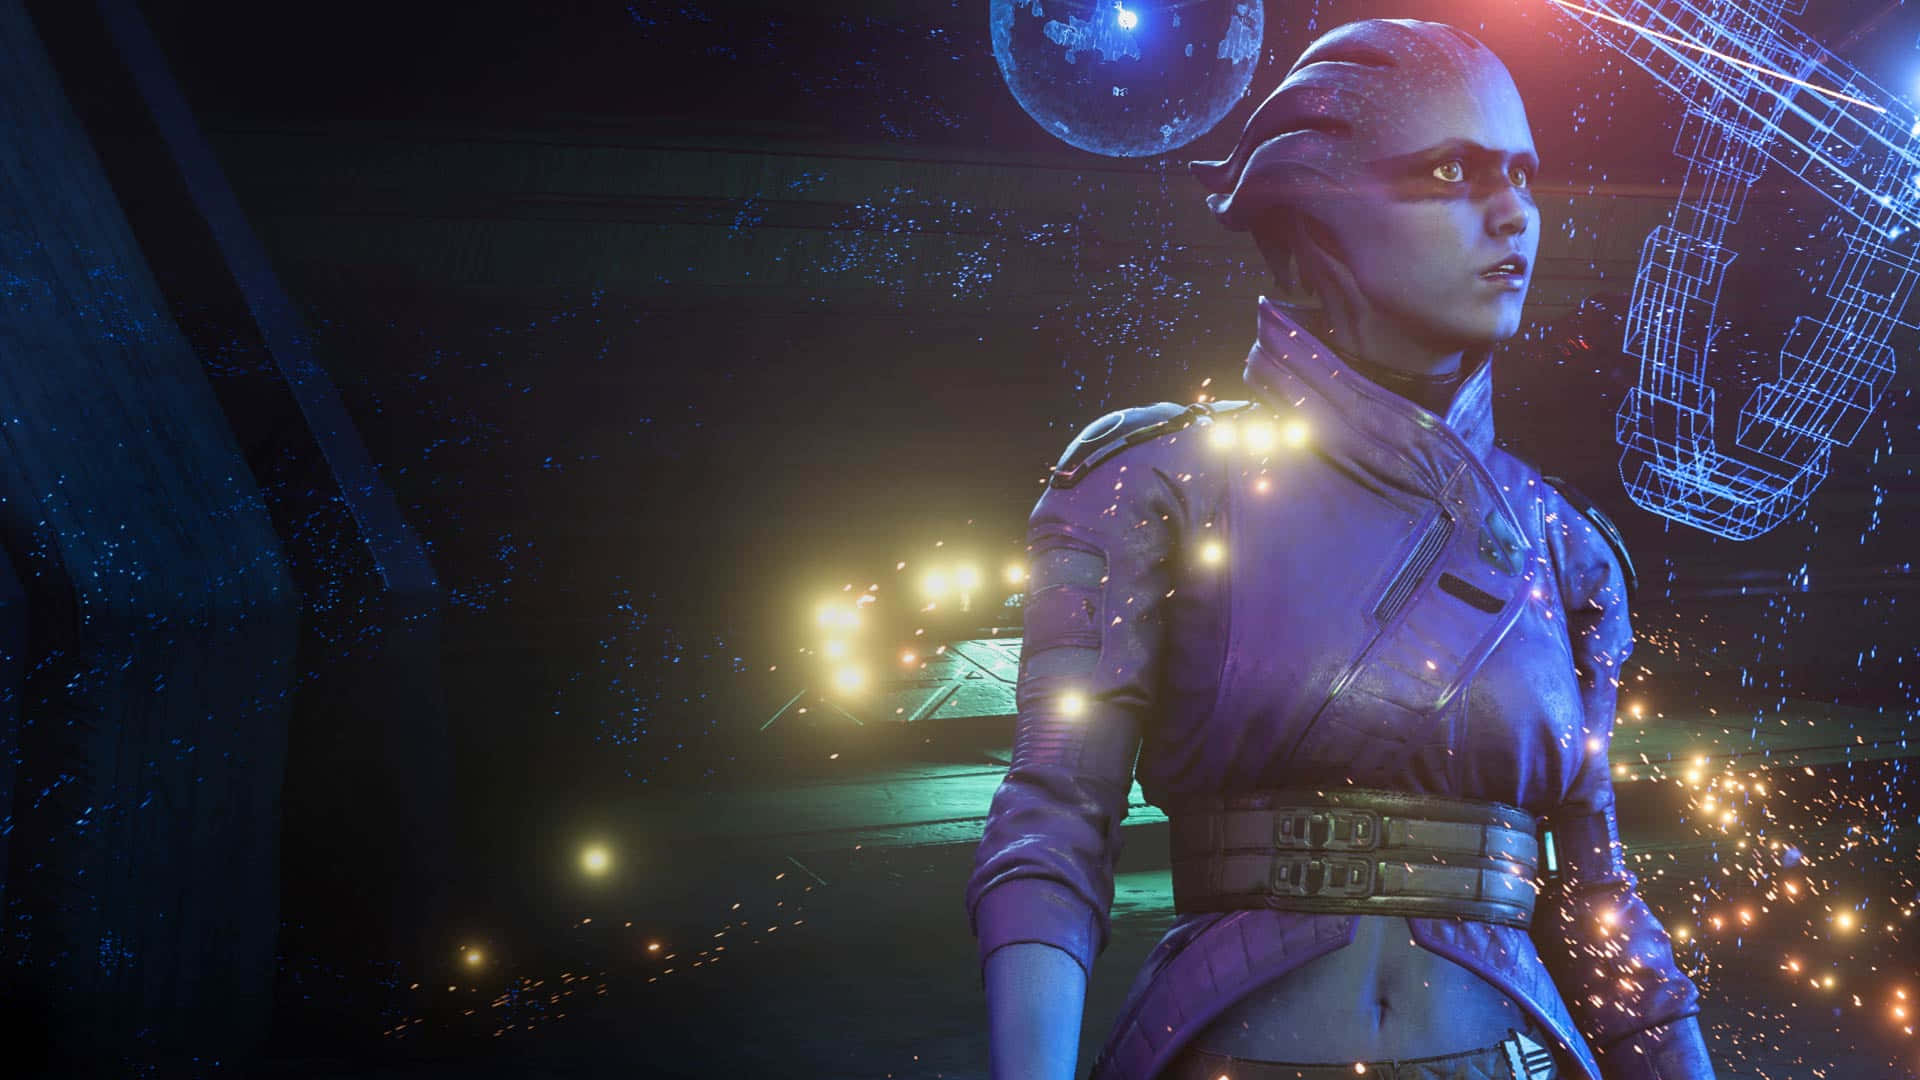 Mass Effect Andromeda Game Artwork Wallpaper